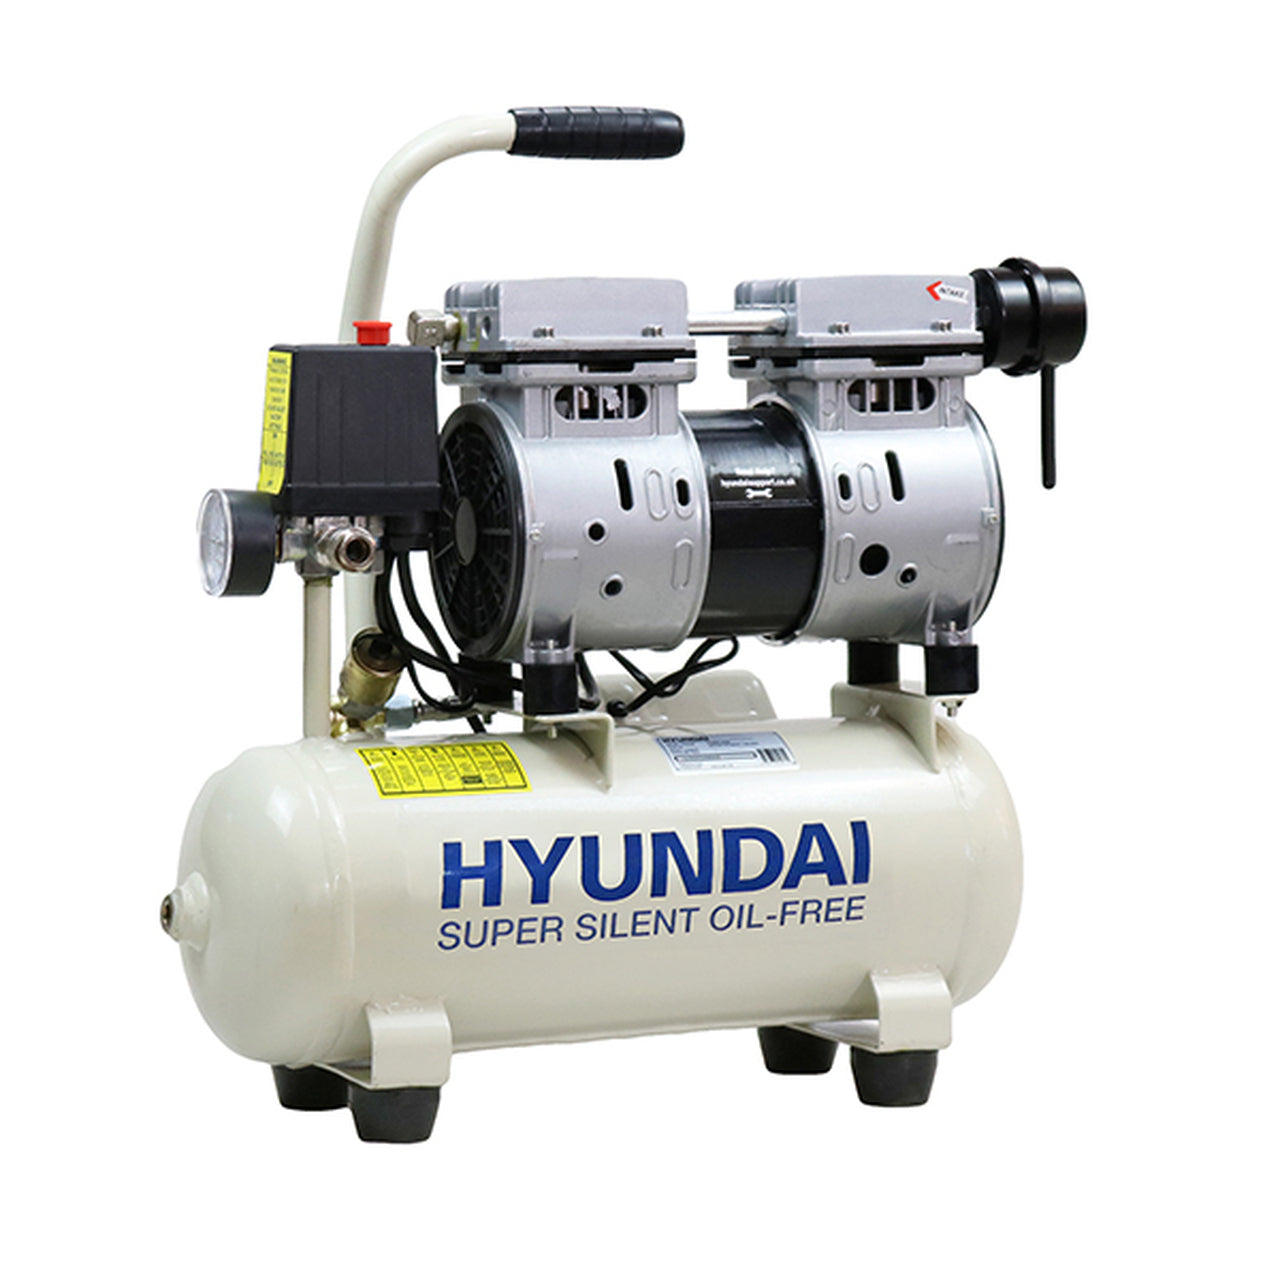 Hyundai-HY5508-8-Litre-Oil-Free-Direct-Drive-Air-Compressor---4CFM/118psi,-Silenced-0.75hp